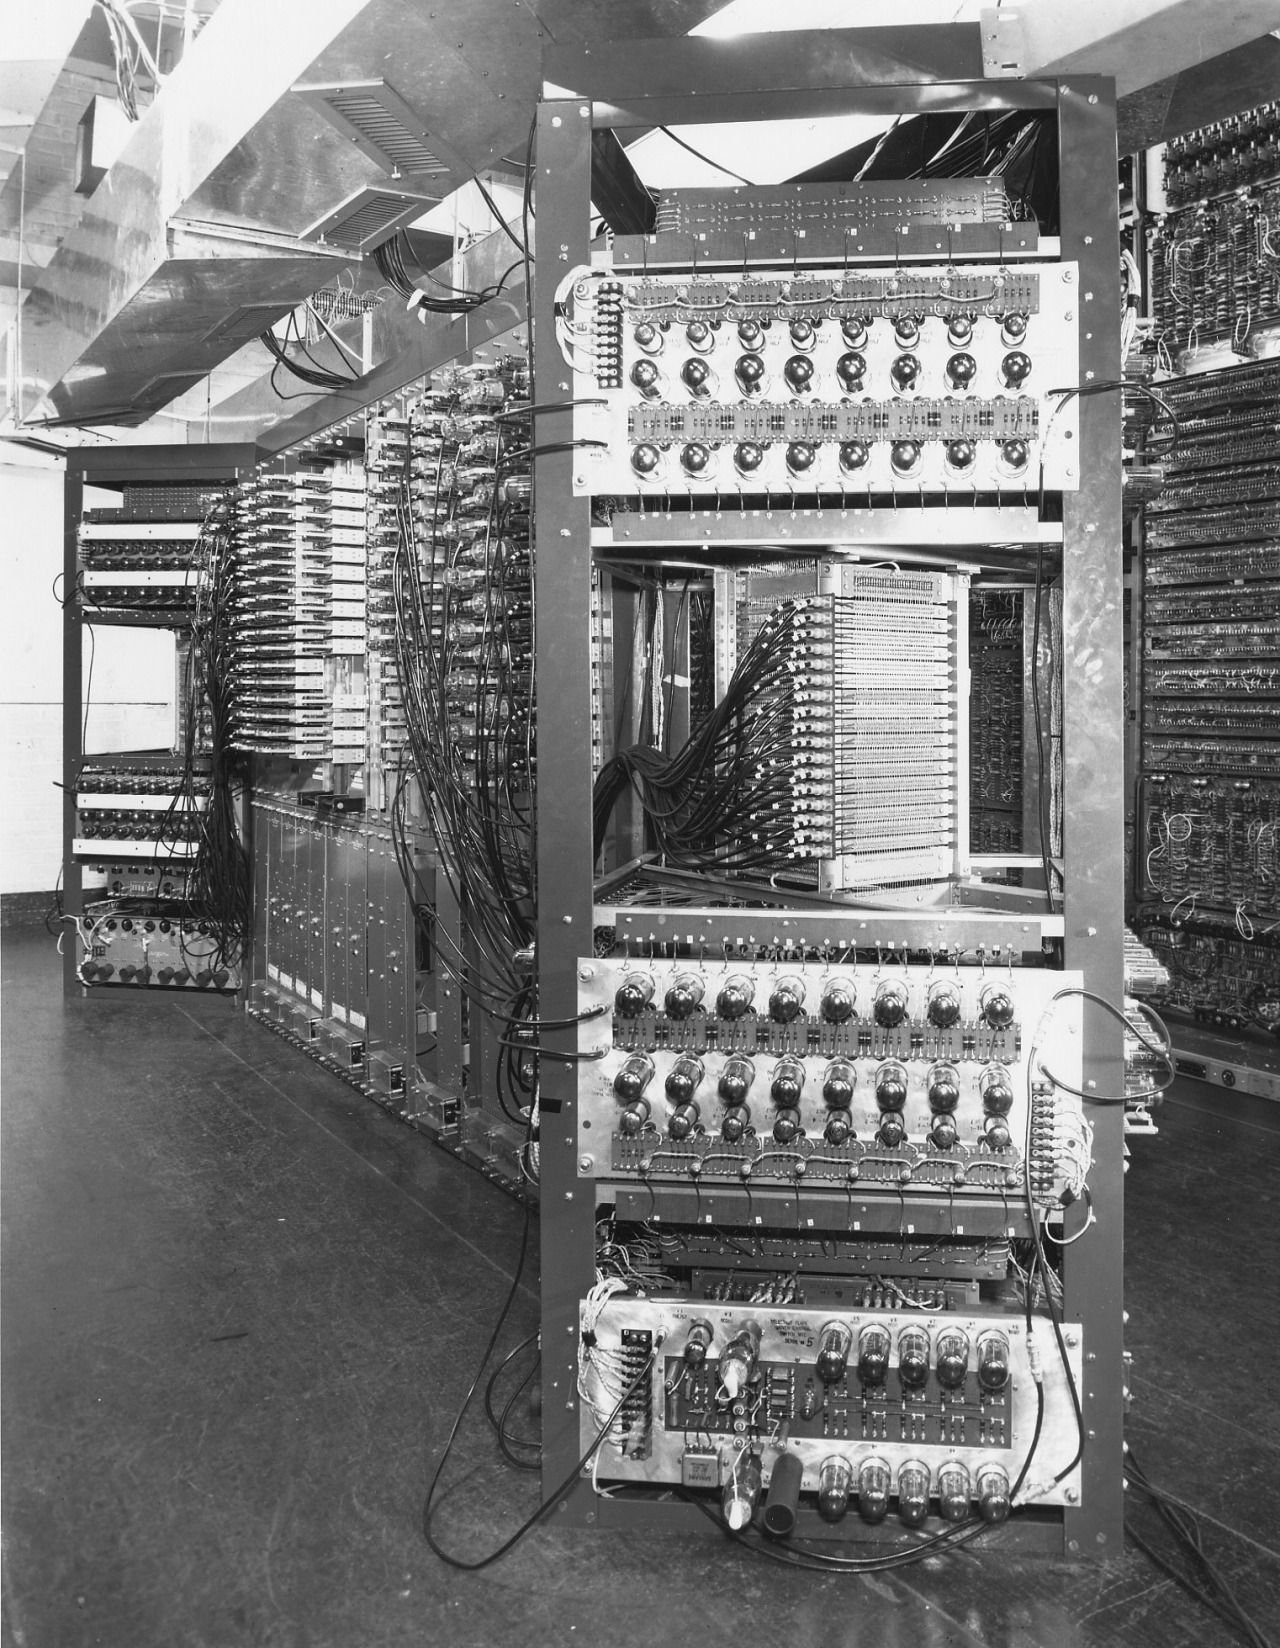 Электронный компьютер электронная машина. Whirlwind 1 компьютер. ЭВМ Урал 1. Eniac 1. Whirlwind-i в 1950 г.